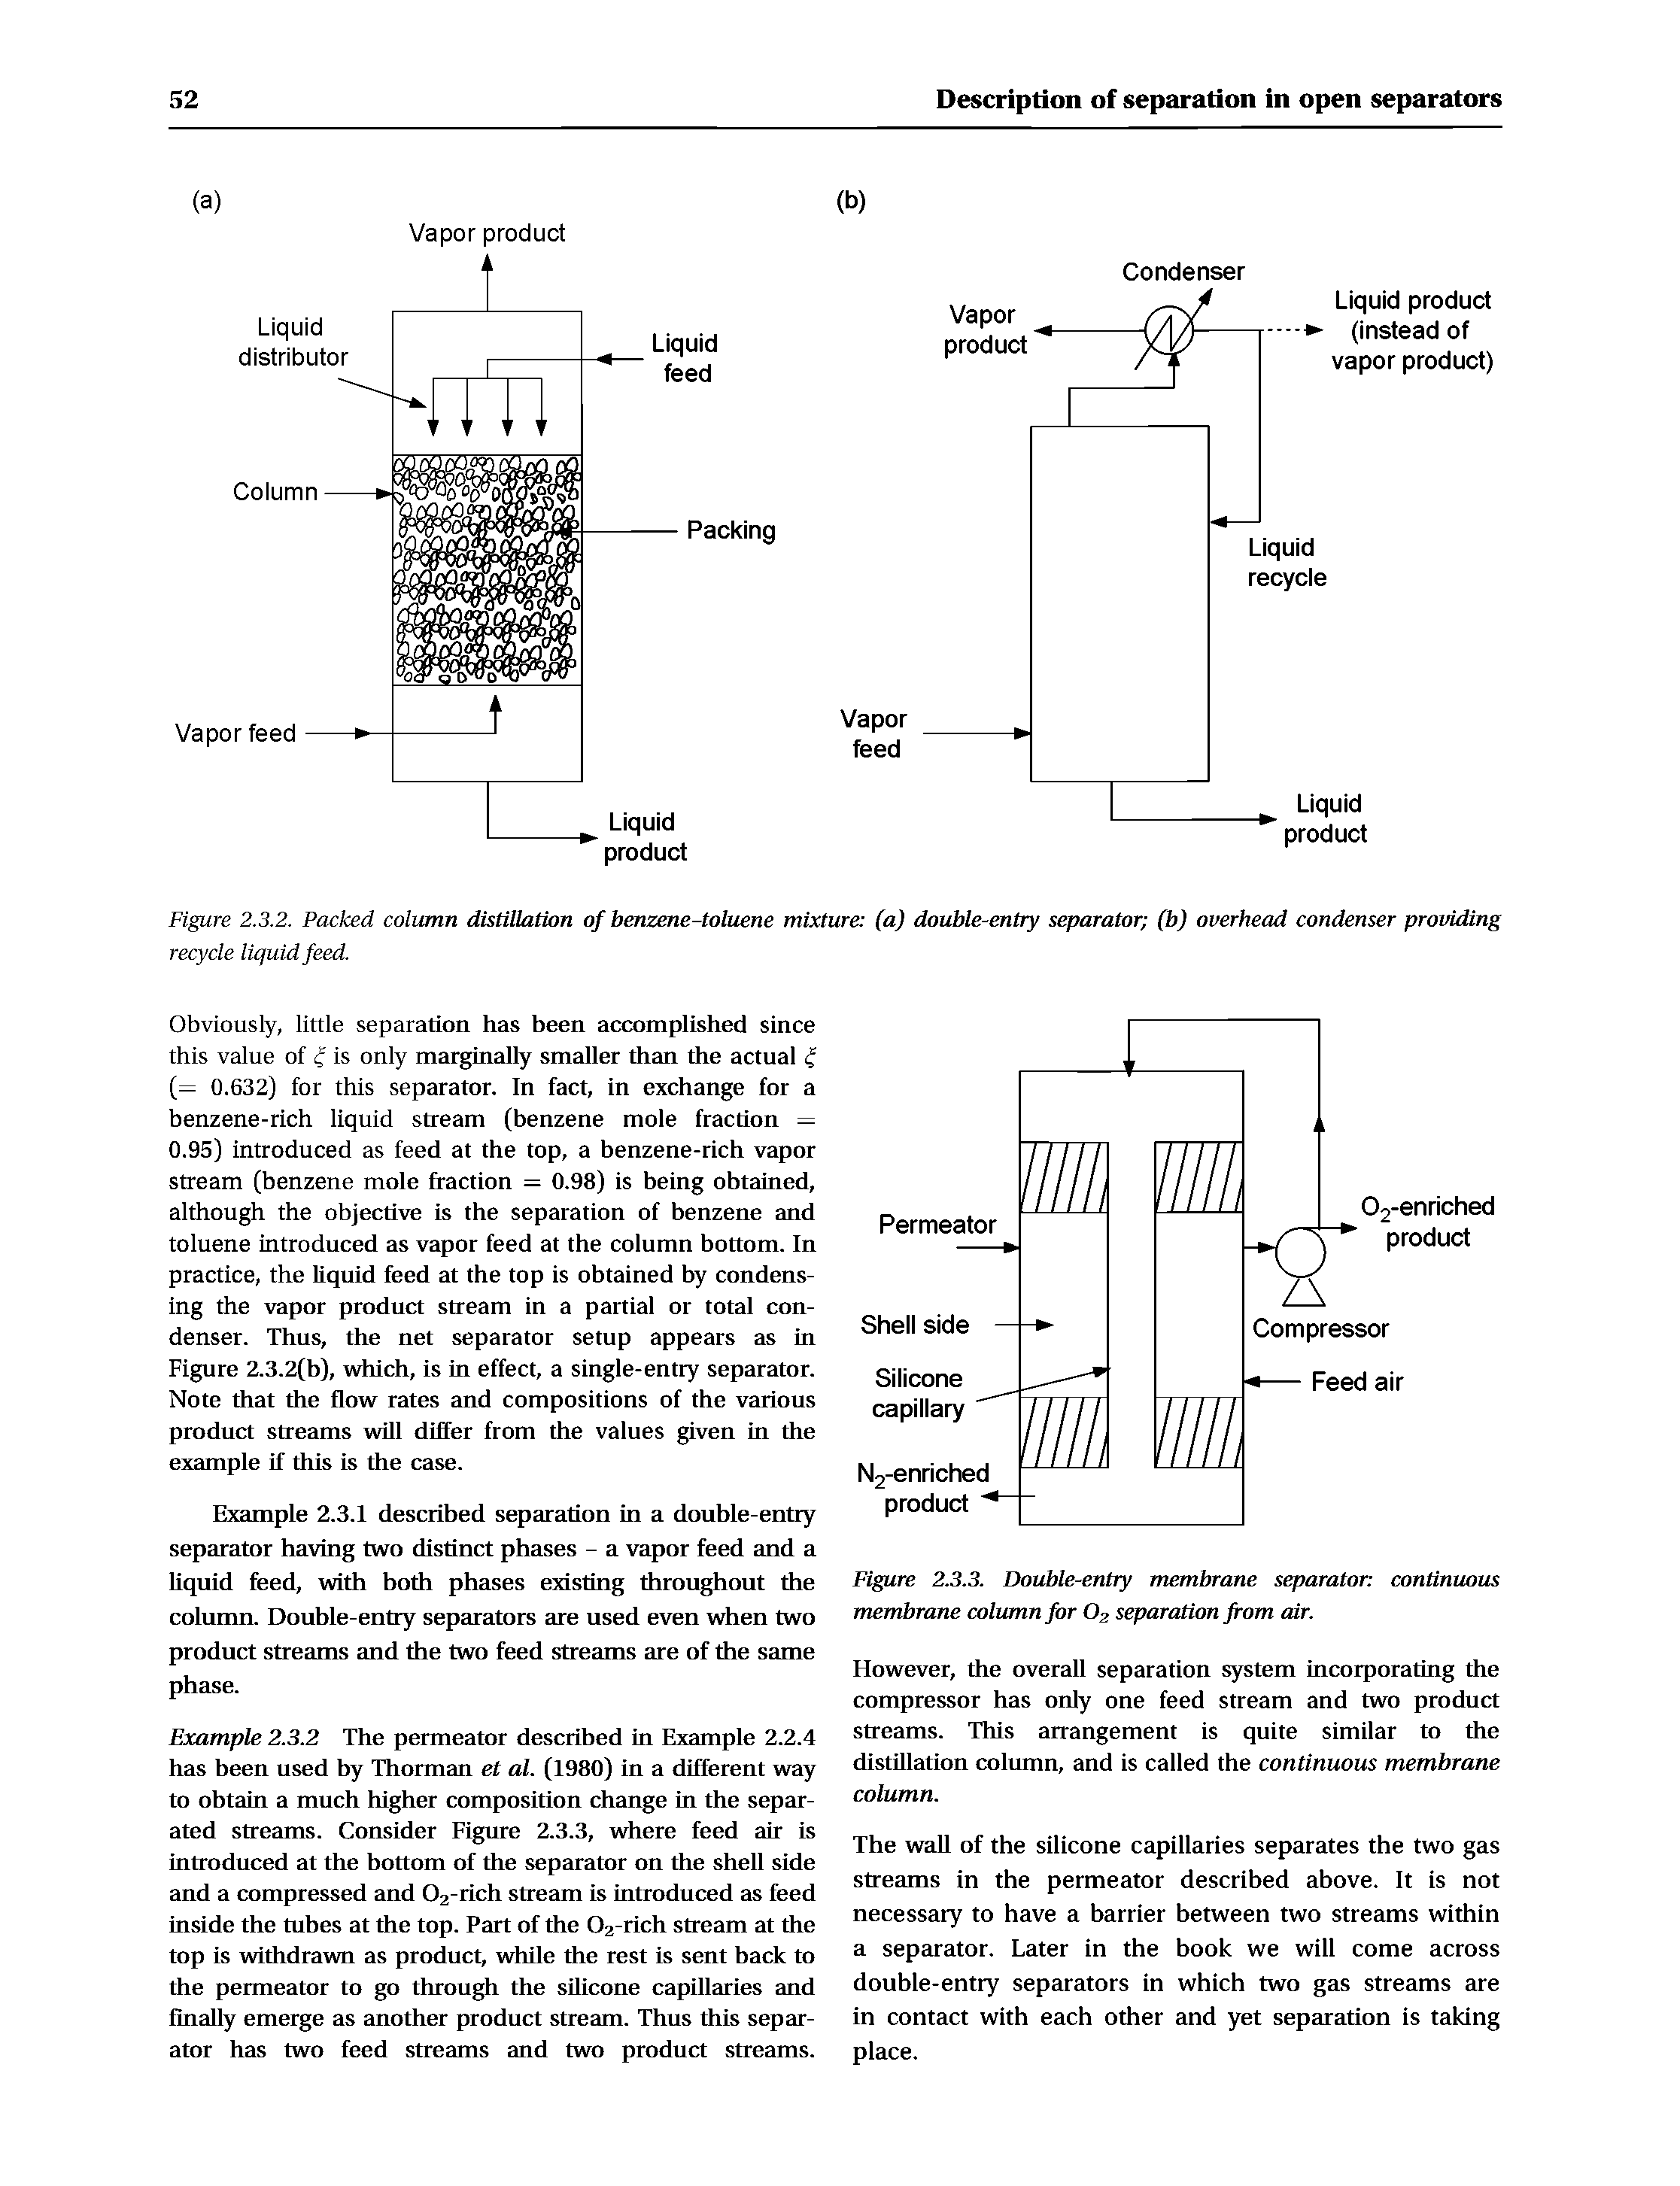 Figure 2.3.2. Packed column distillation of benzene-toluene mixture (a) double-entry separator (b) overhead condenser providing...